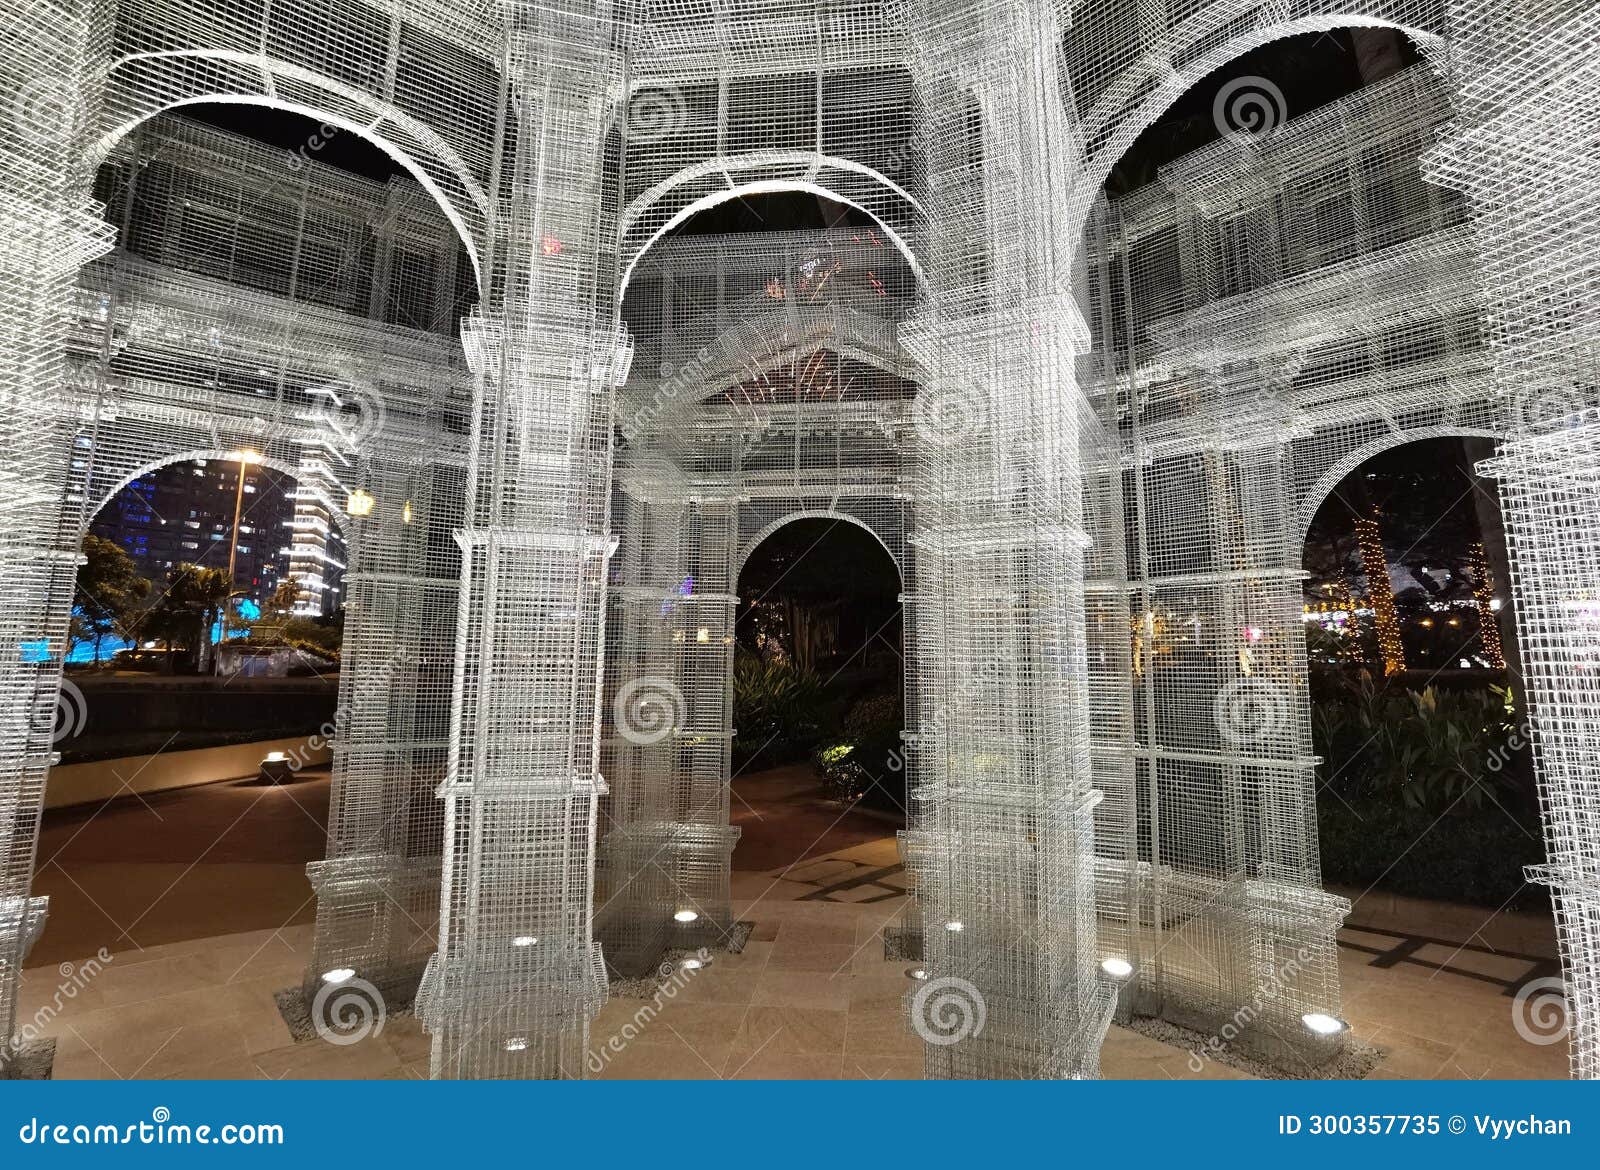 macau wynn hotel architecture  etherea art installation edoardo tresoldi light up macao wire frame tower sculpture